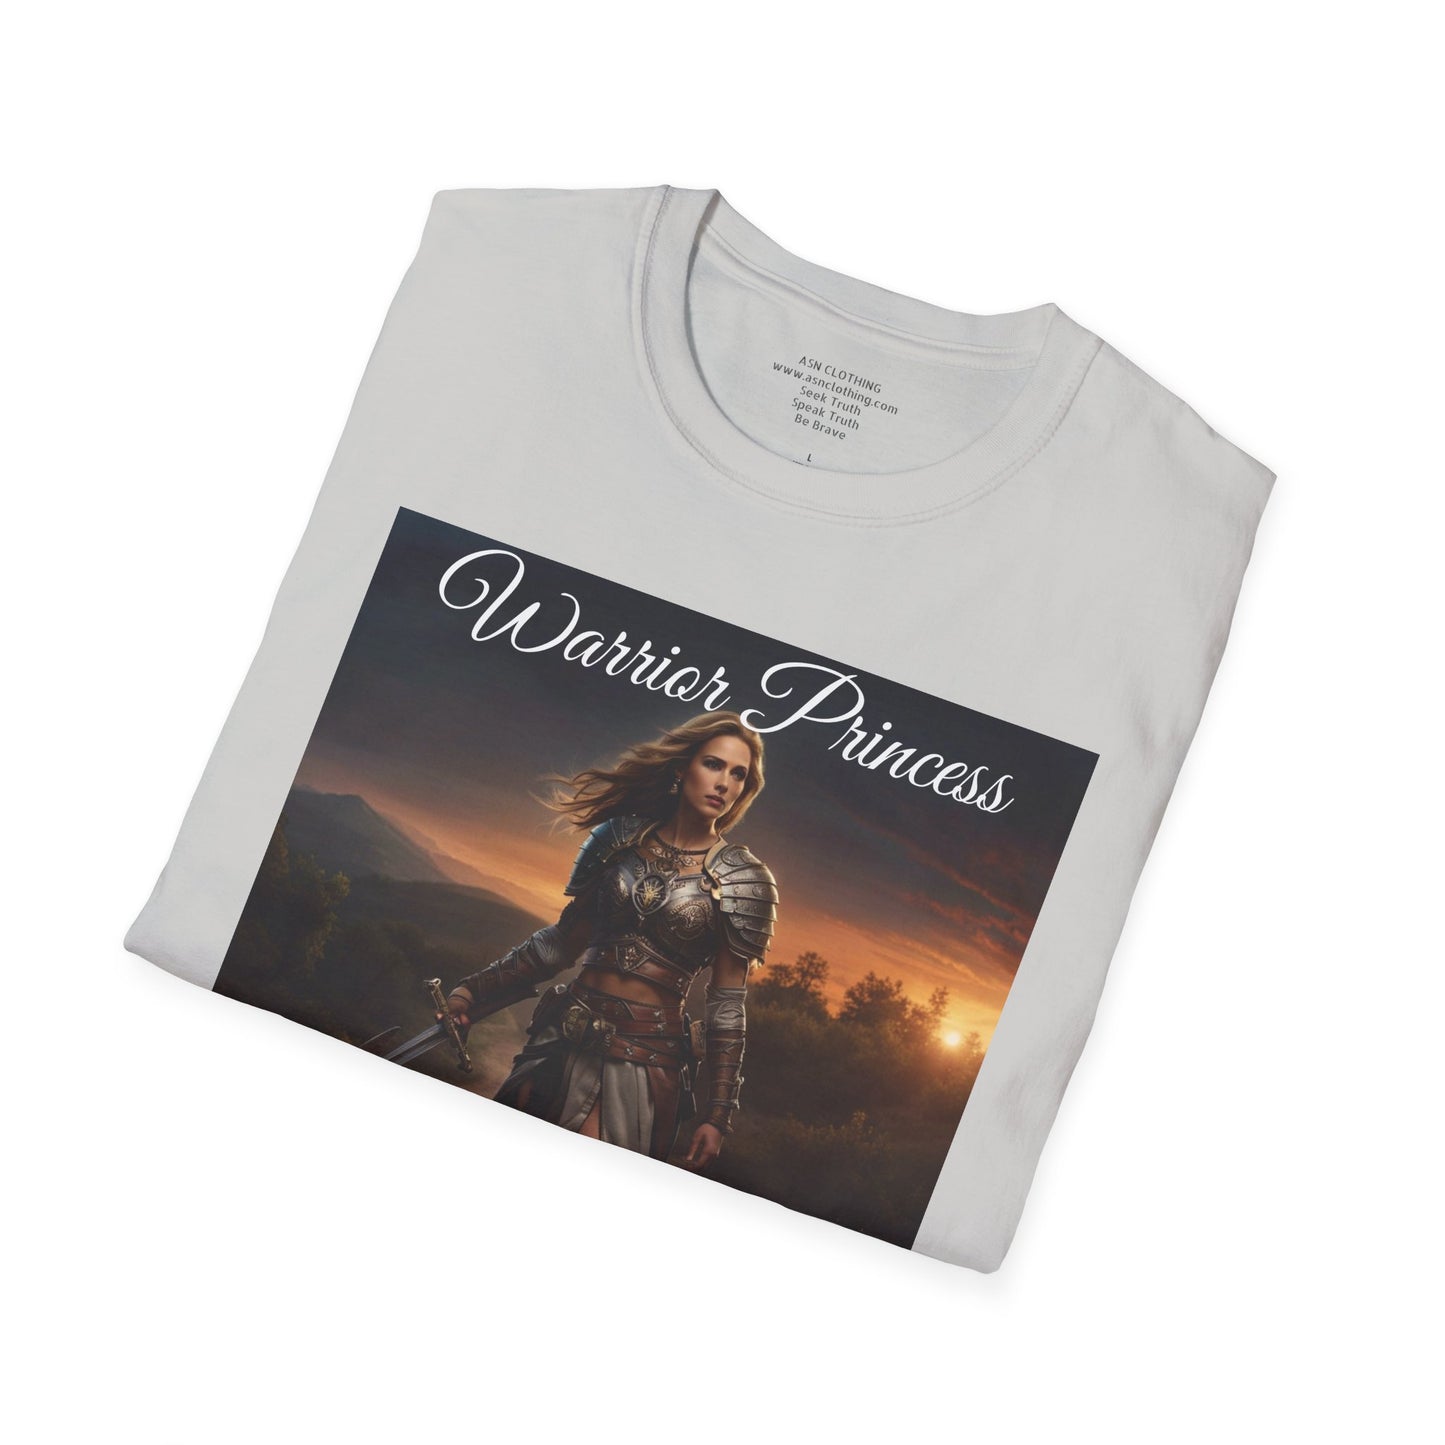 Warrior Princess Road Less Traveled T-Shirt (Gildan)